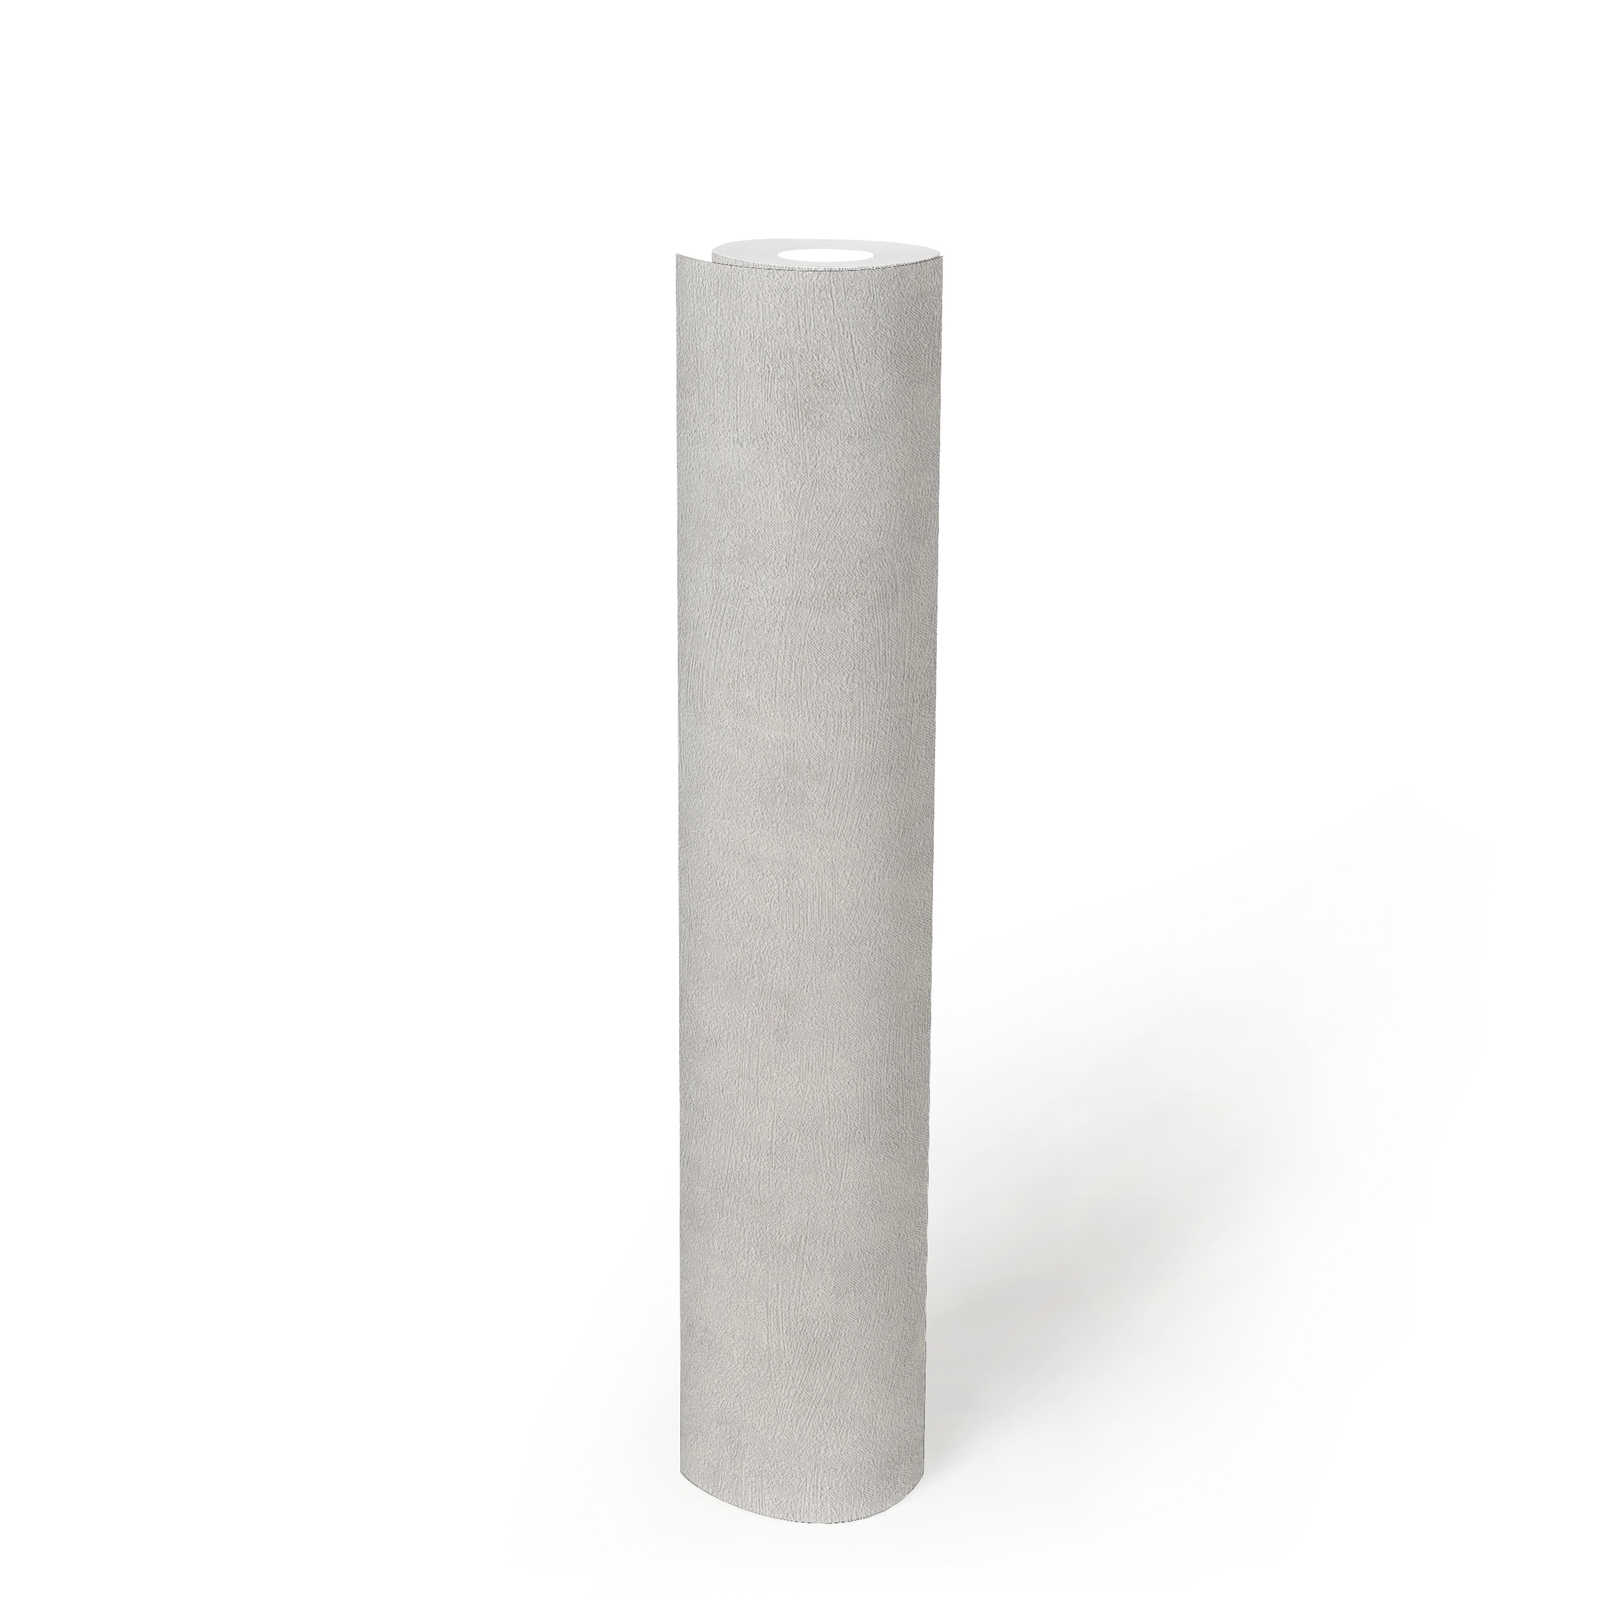             Vliestapete mit Strukturmuster Uni – Weiß, Grau
        